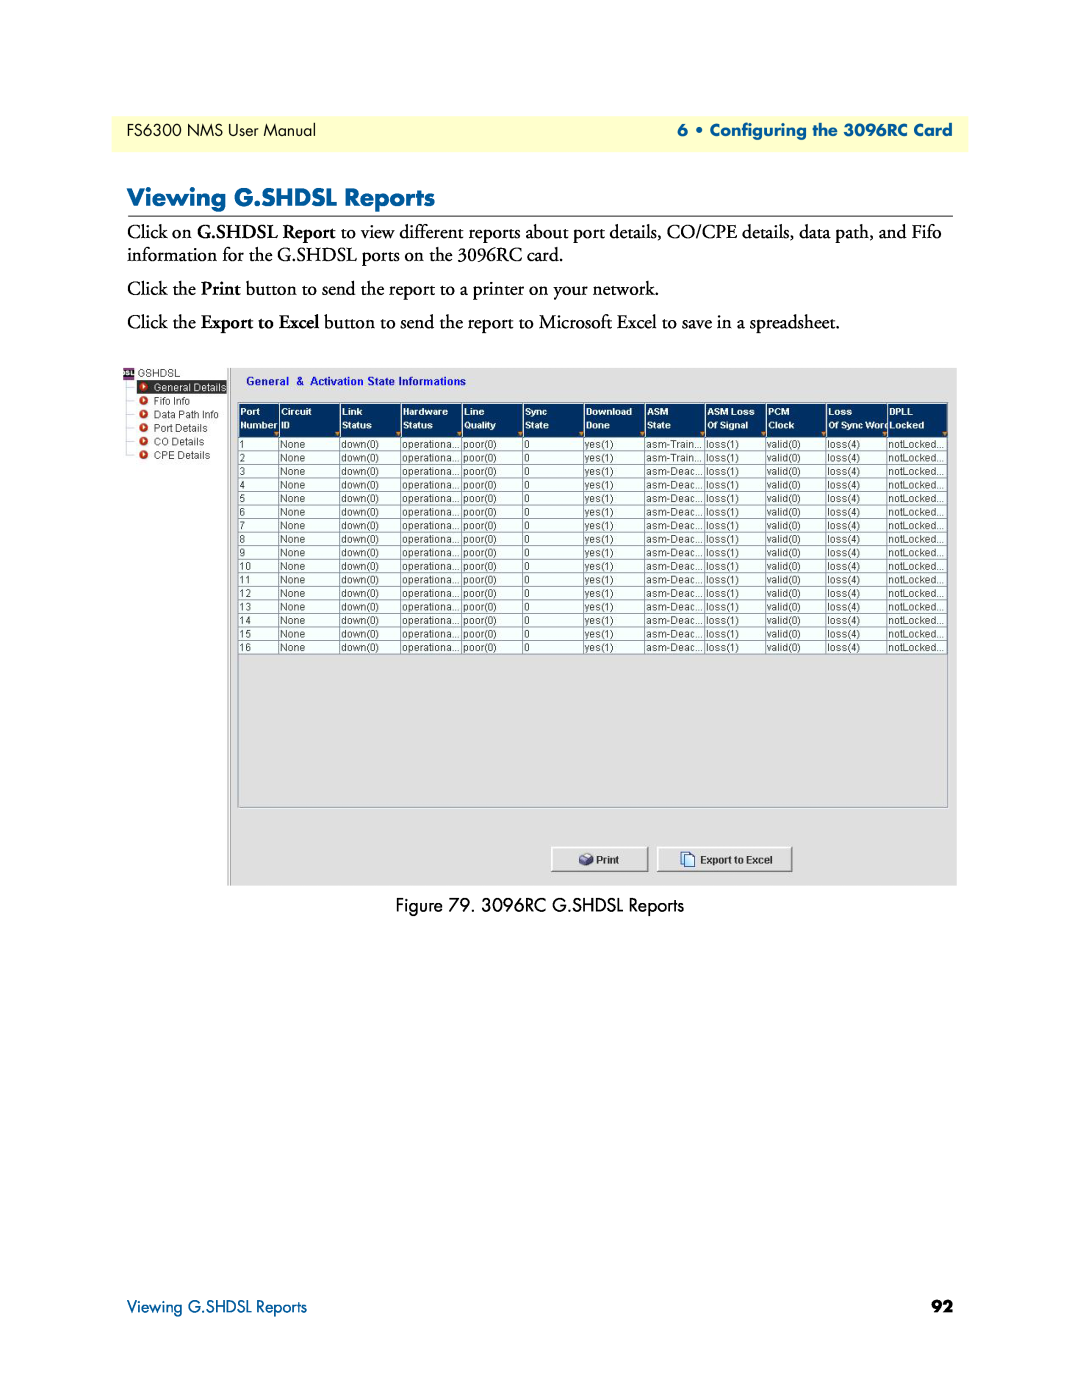 Patton electronic 6300 user manual Viewing G.SHDSL Reports, 3096RC G.SHDSL Reports 